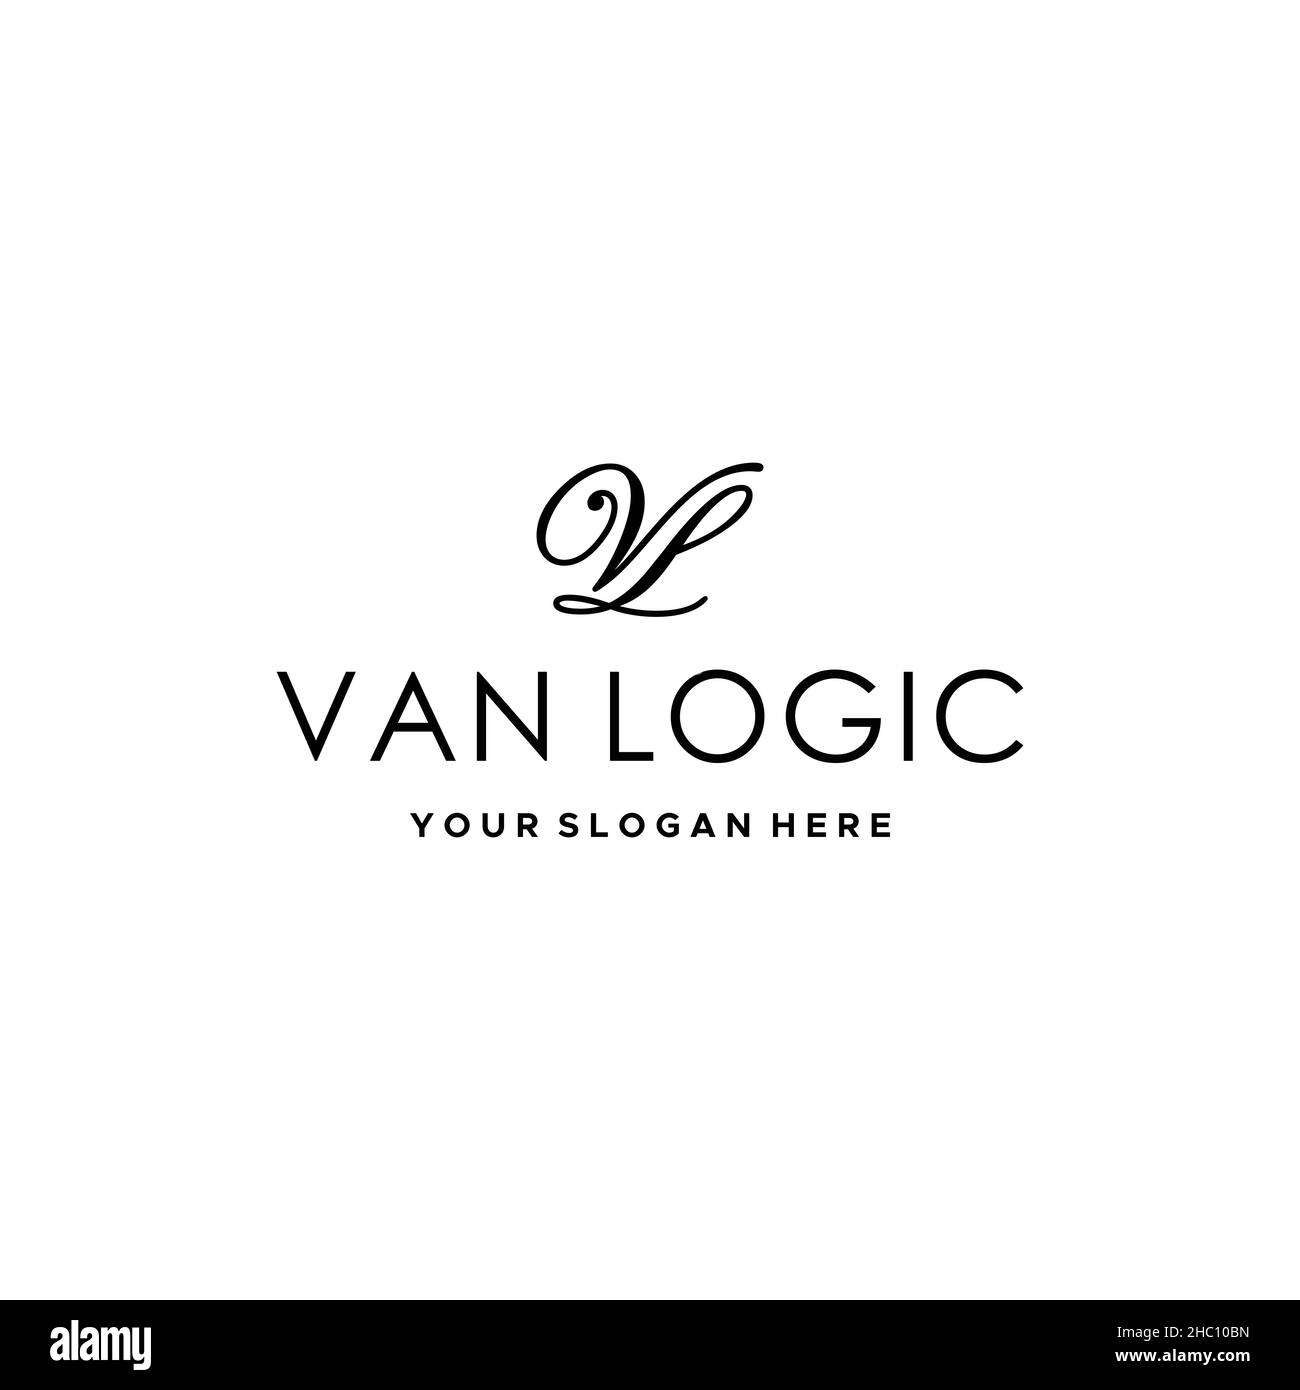 Vl initials logo Stock Vector Images - Alamy